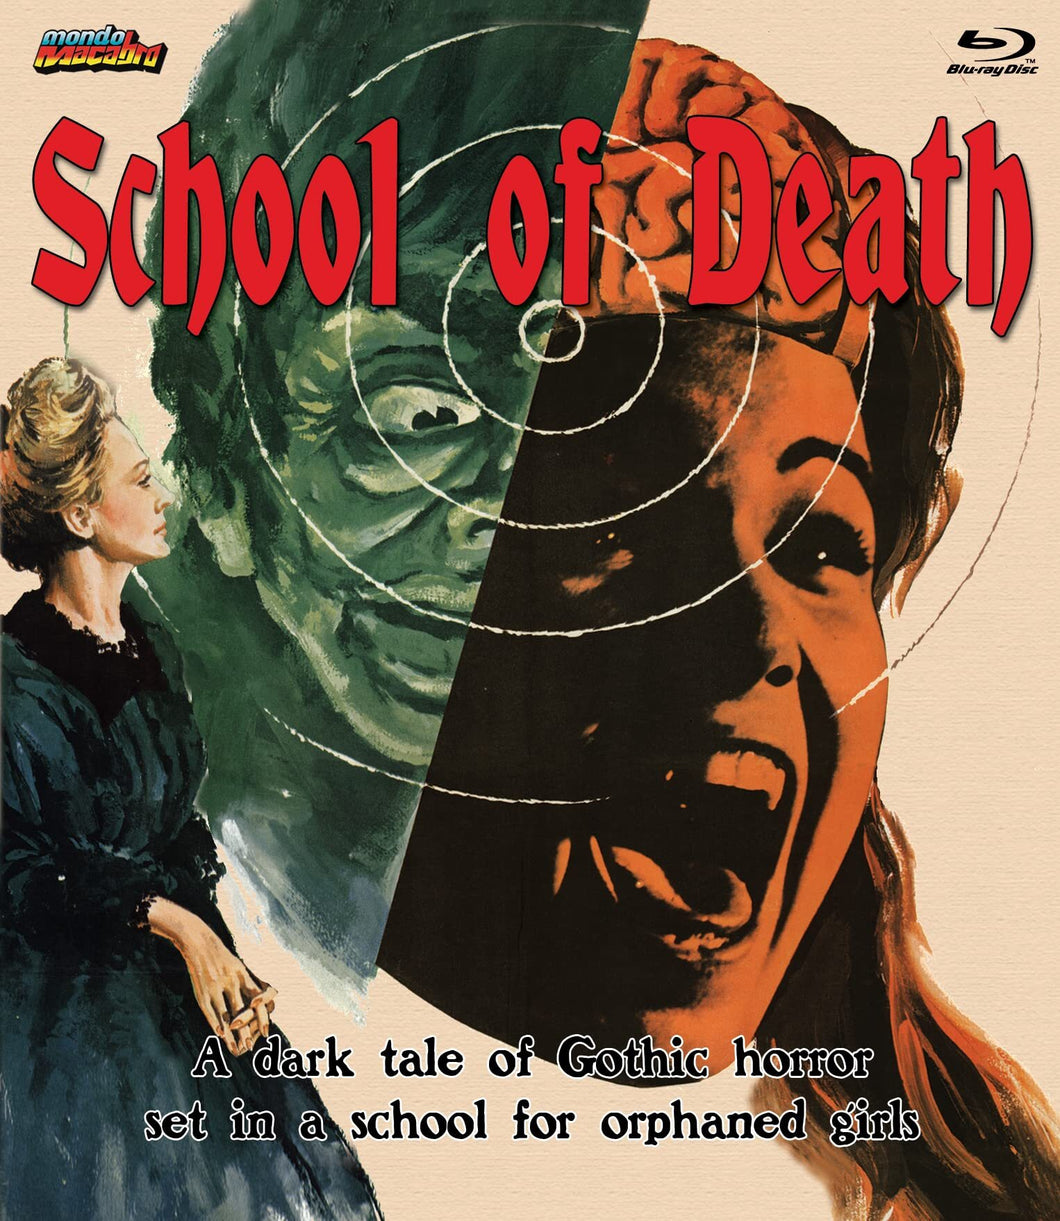 School of Death (1975) de Pedro Luis Ramirez - front cover